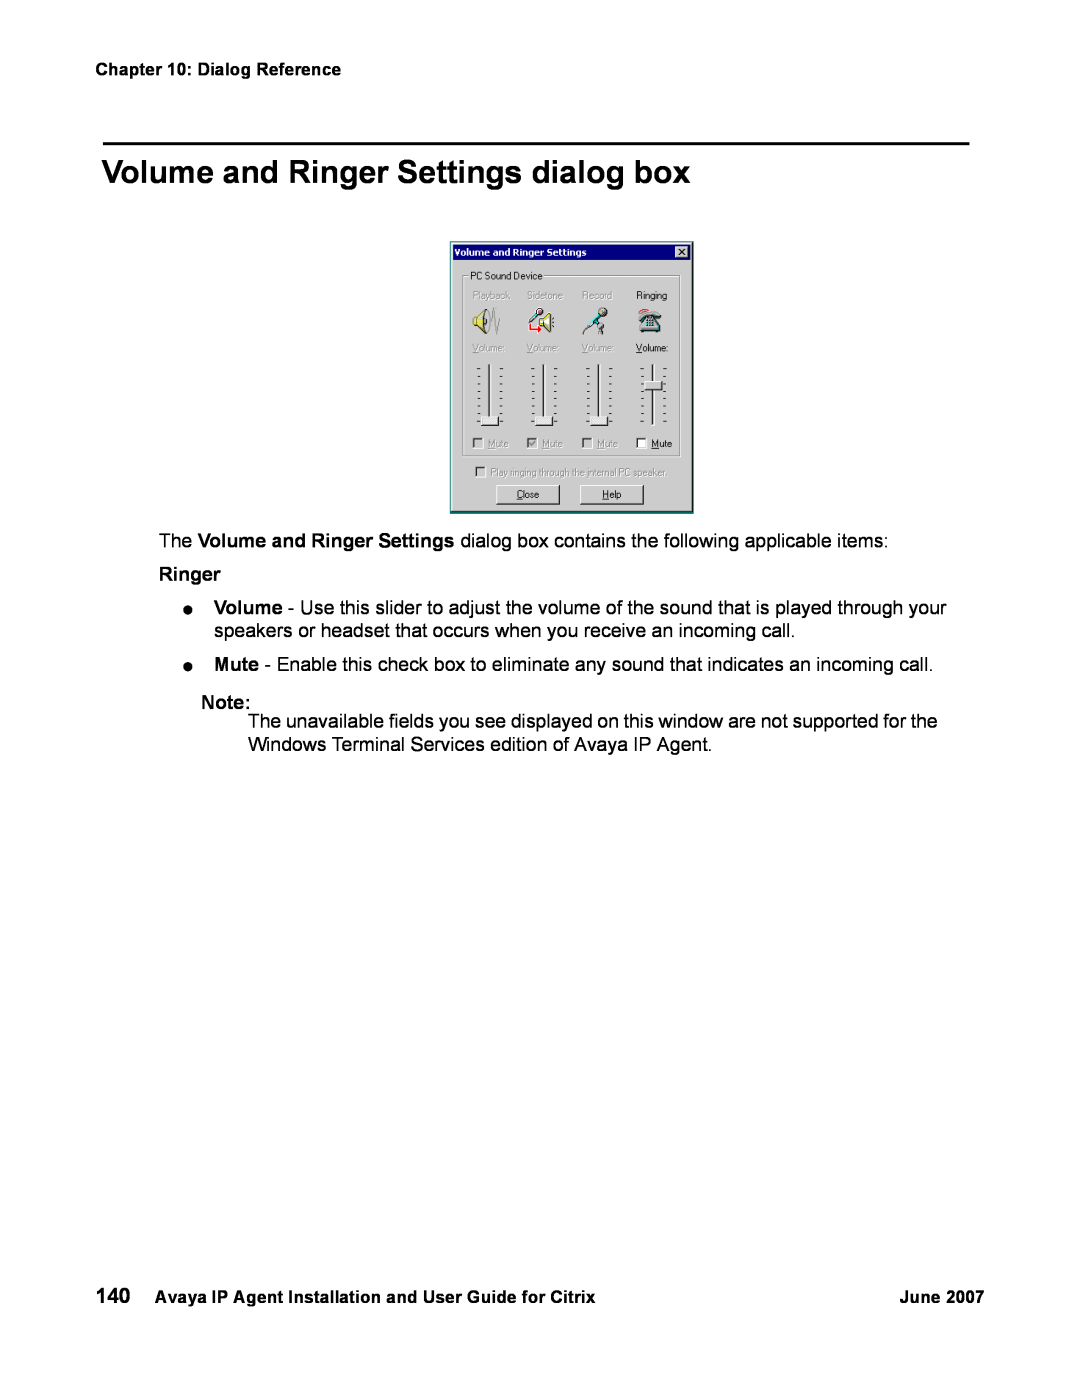 Avaya 7 manual Volume and Ringer Settings dialog box 